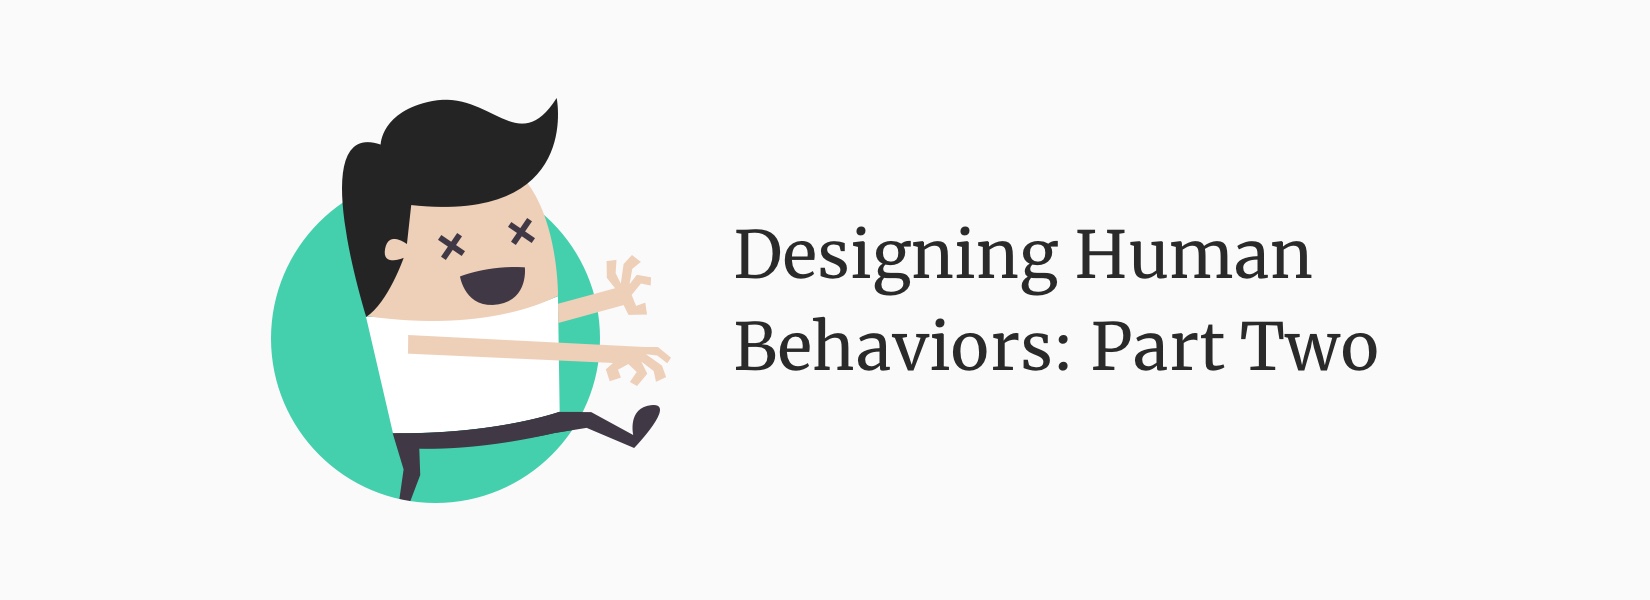 Designing Human Behaviors: Part Two